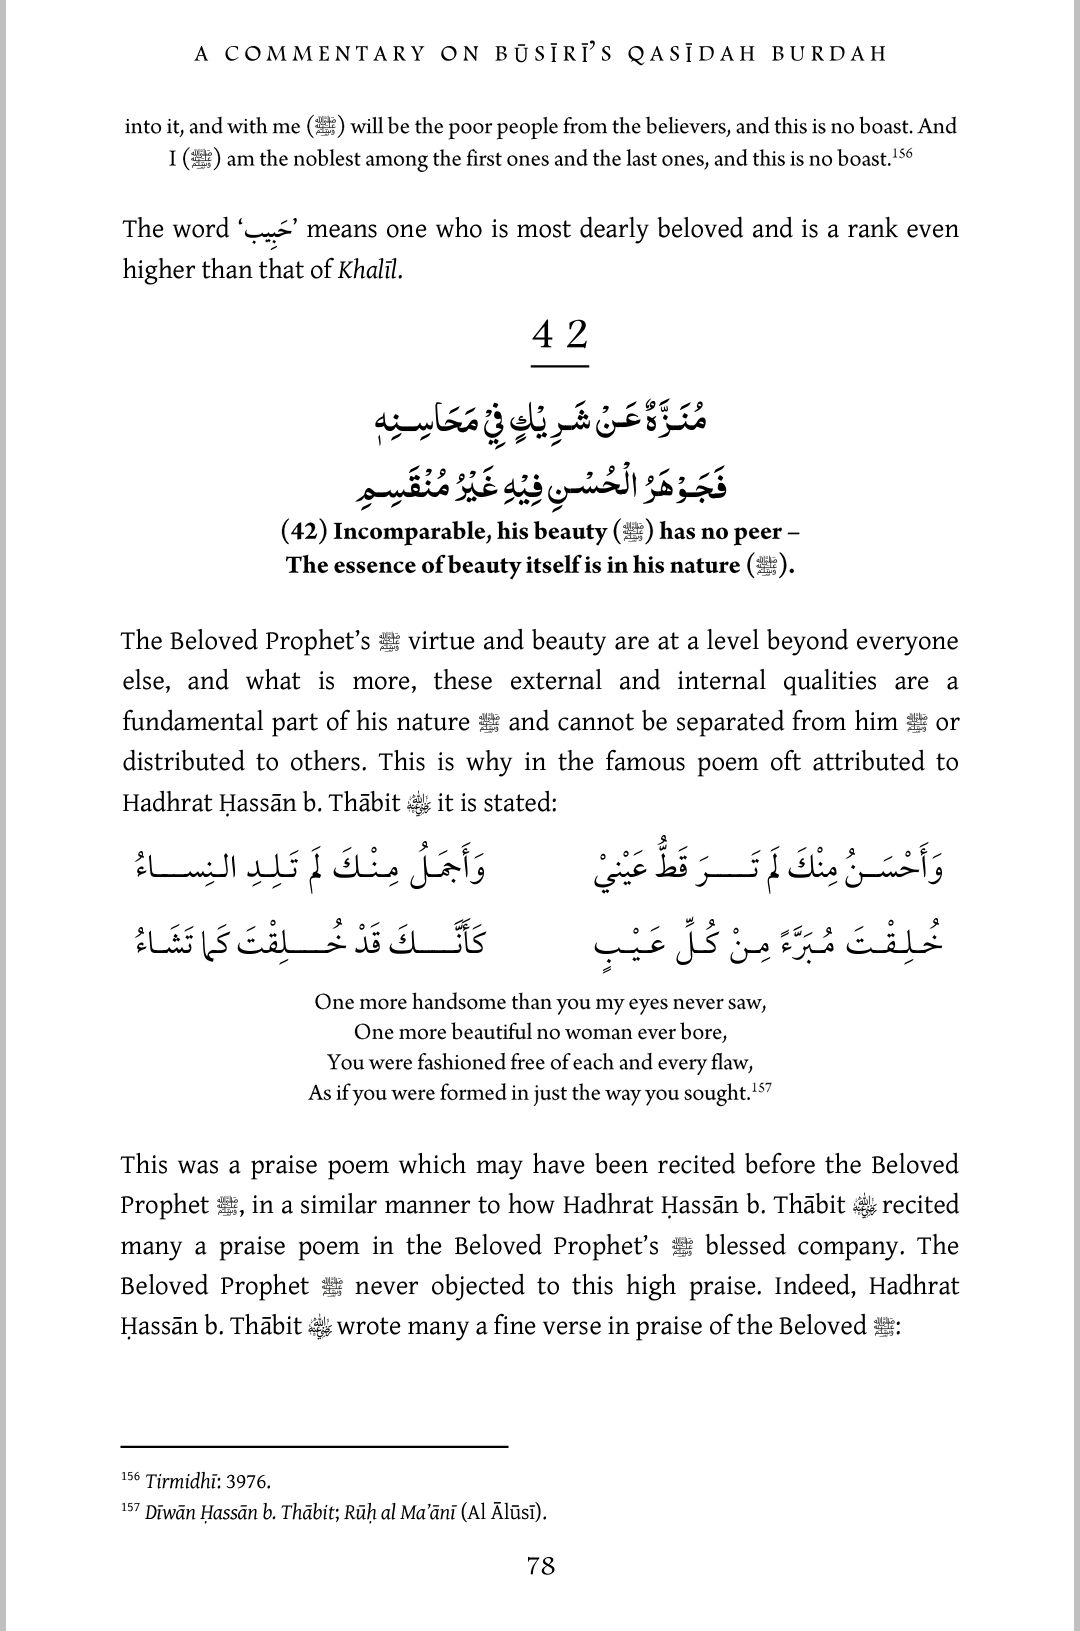 Mercy’s Cloak Unfurled: A Commentary on Busiri’s Qasidah Burdah